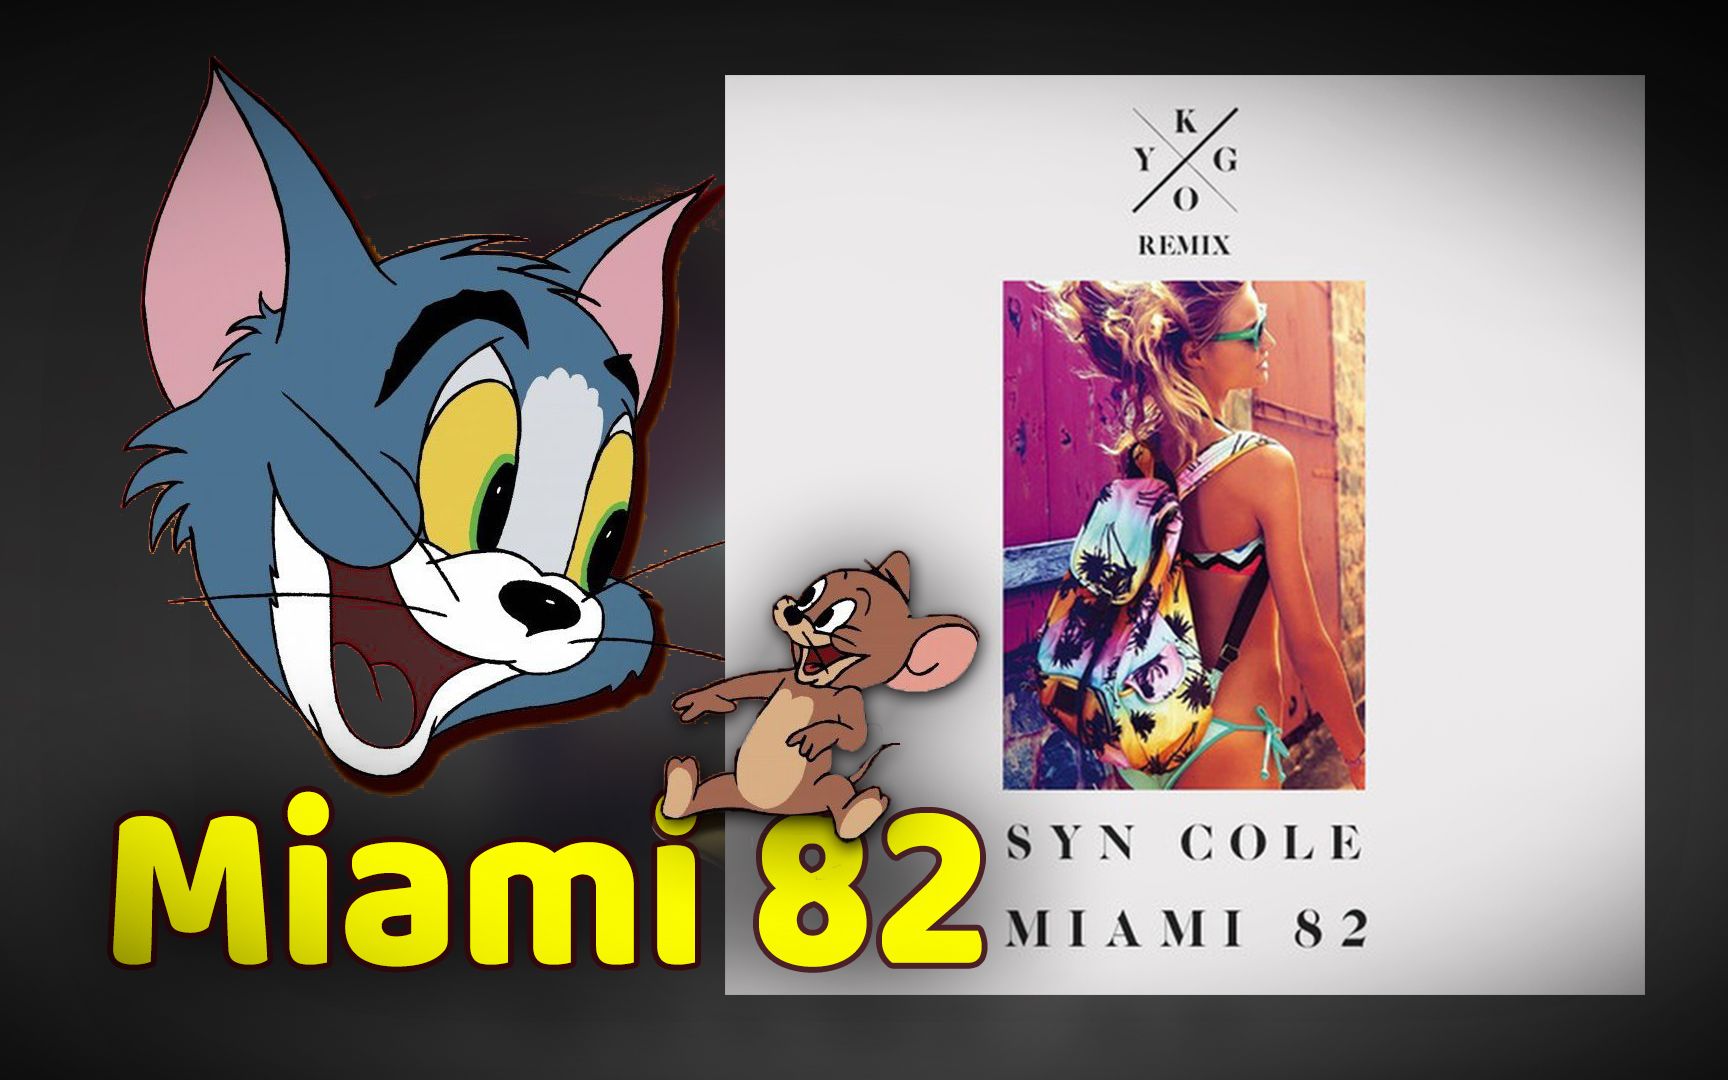 【猫鼠电音】Miami 82 (Kygo Remix)